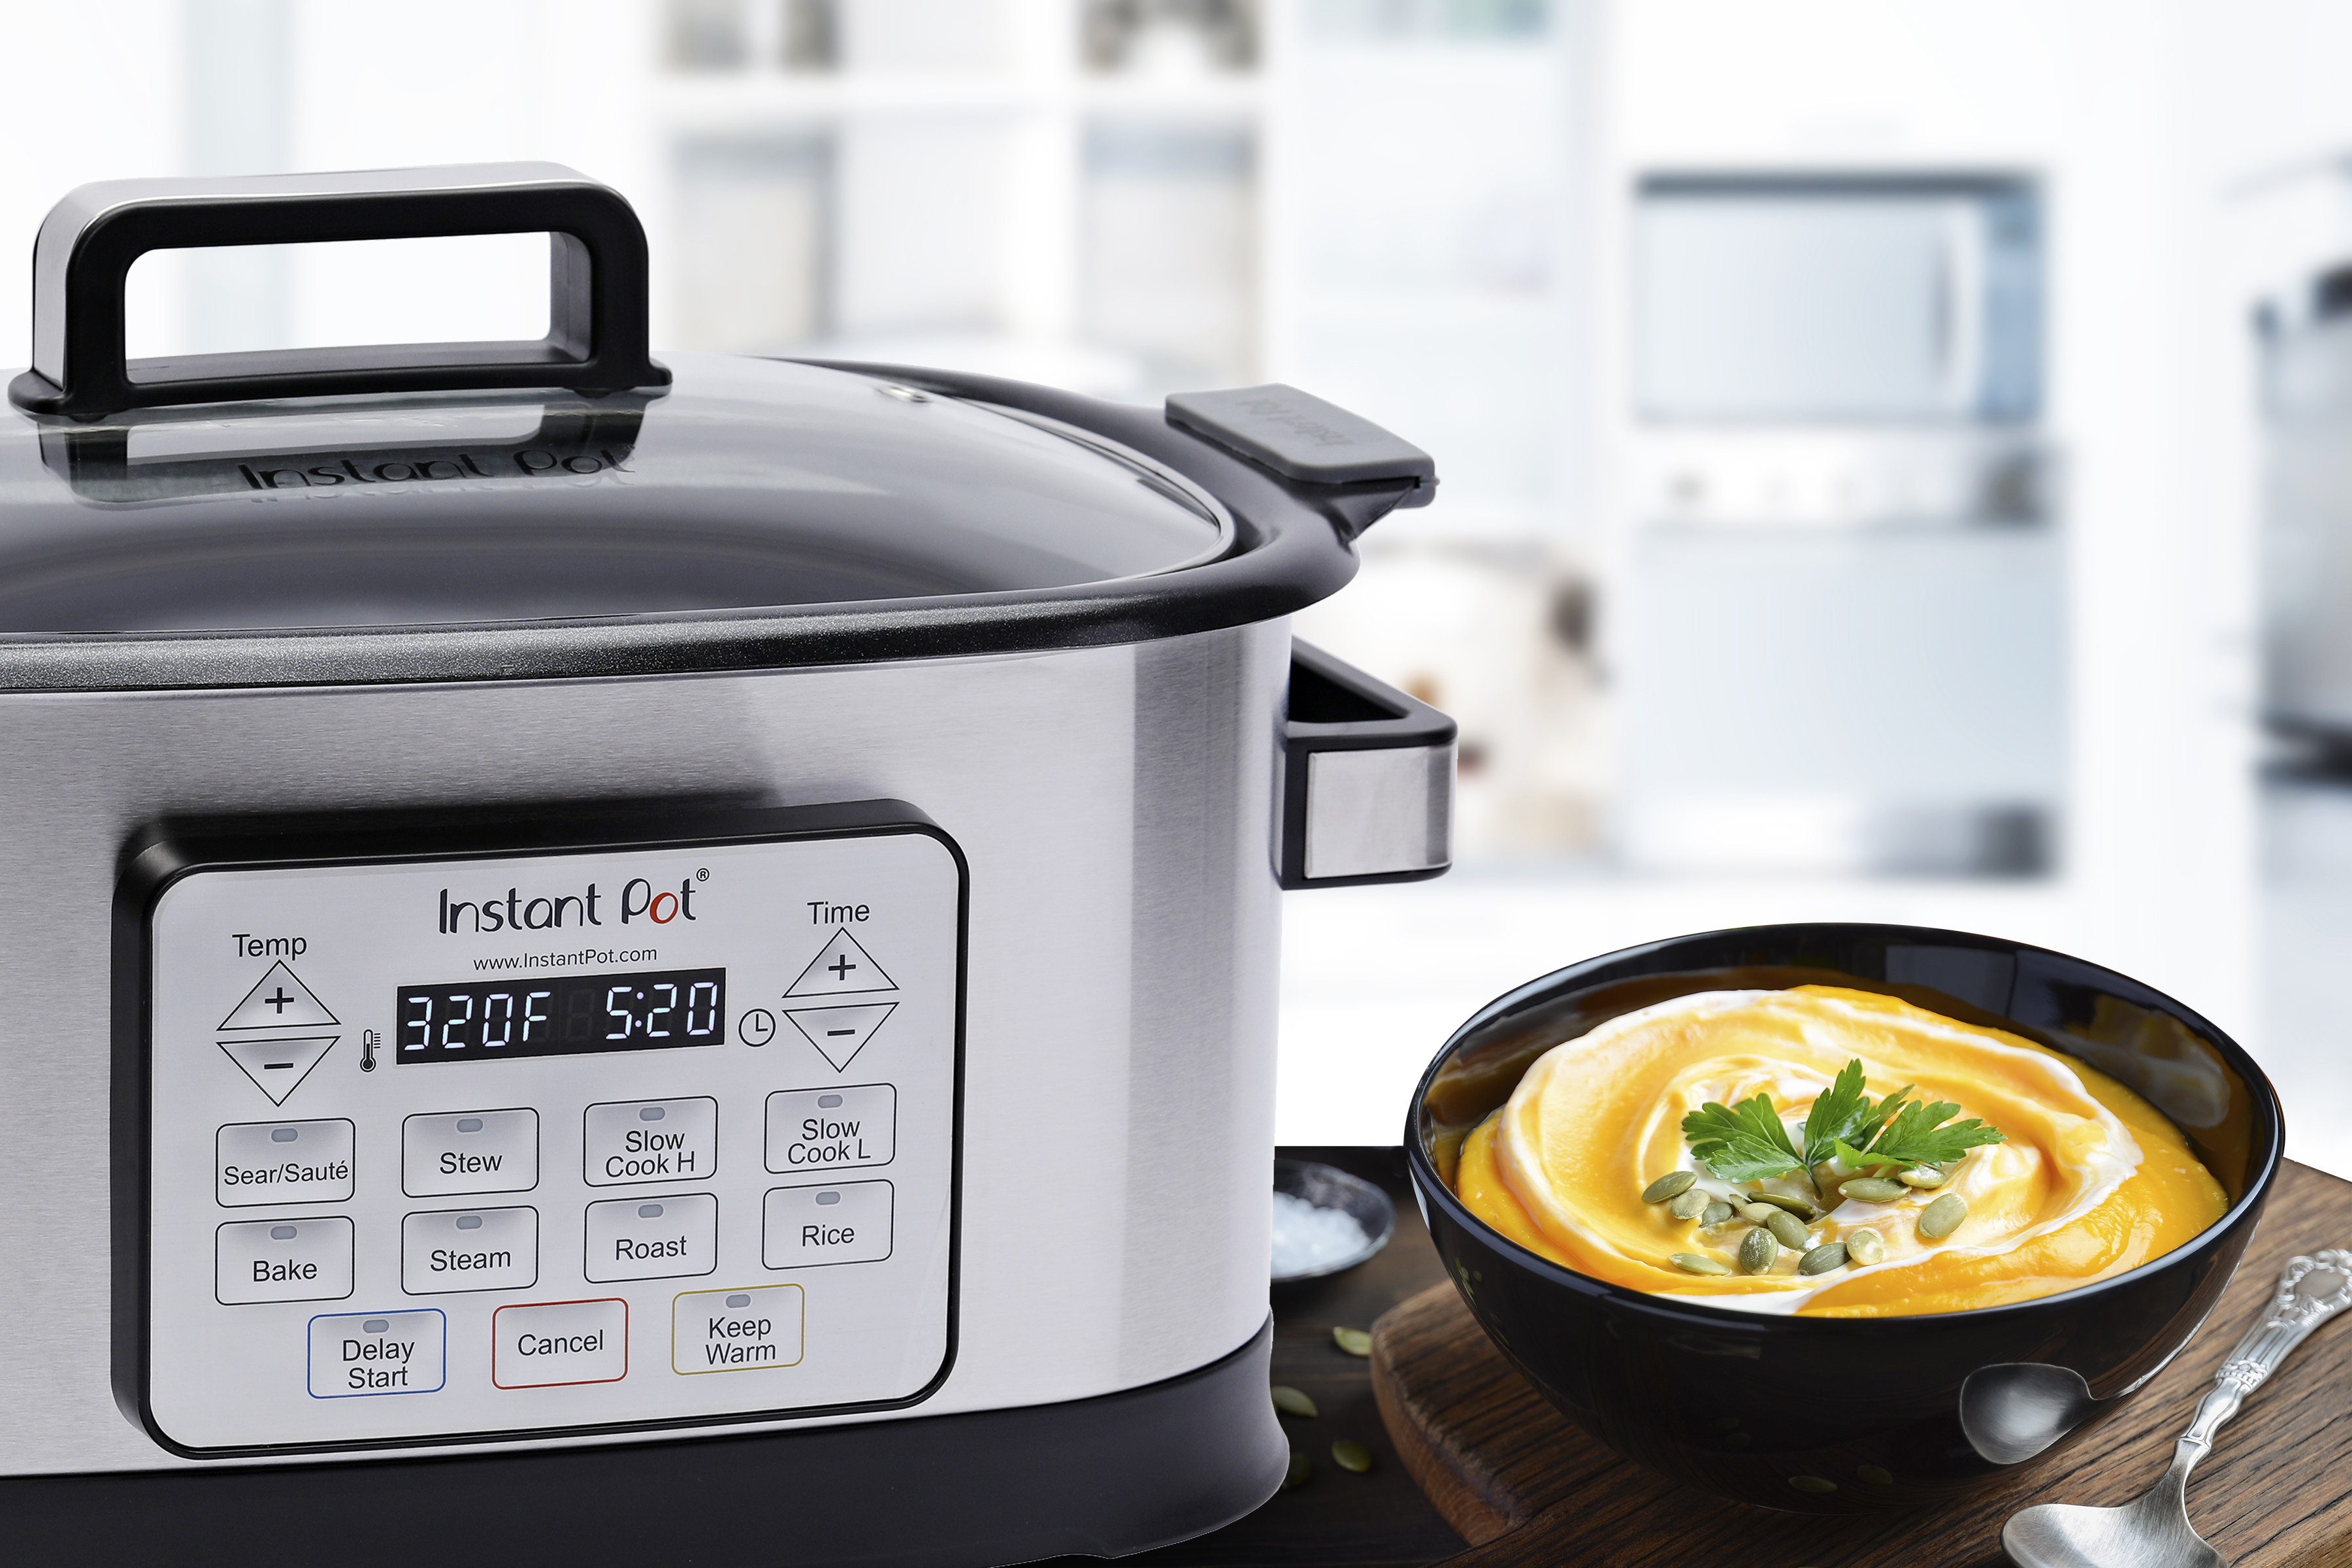 Instant Pot Gem Electric Pressure Cooker, Programmable Multi-Use Slow Cooker, 6 Quart - image 5 of 6